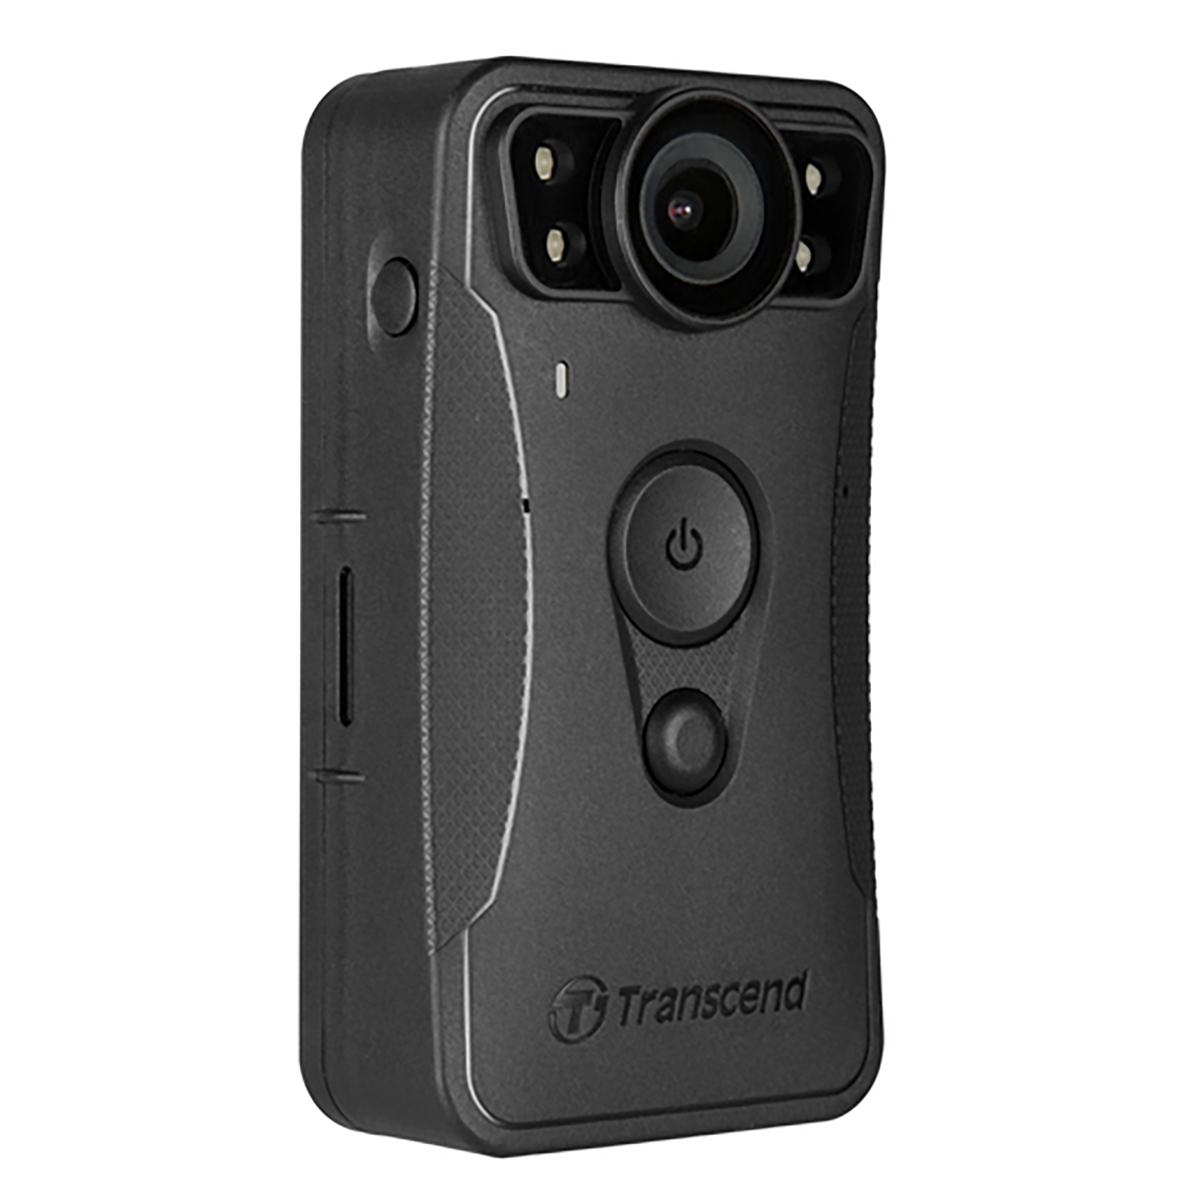 Transcend Drive Pro Bodycam 30 RAM 64 GB WiFi + BT